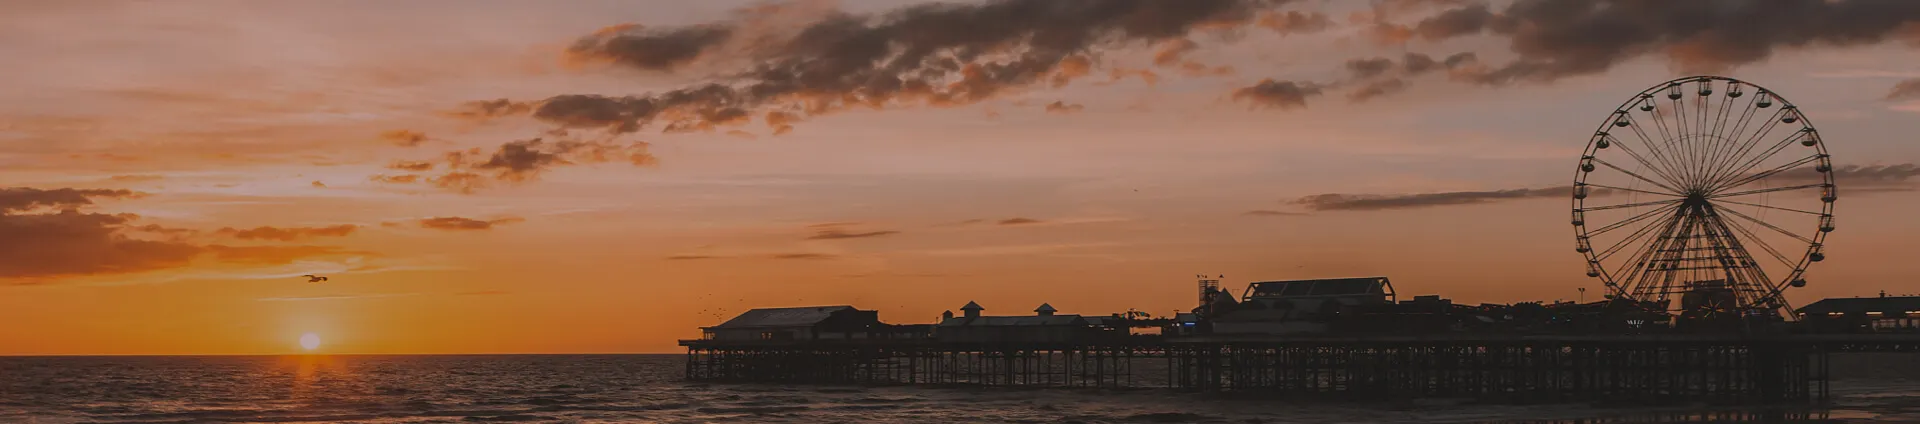 Blackpool Pleasure Beach view